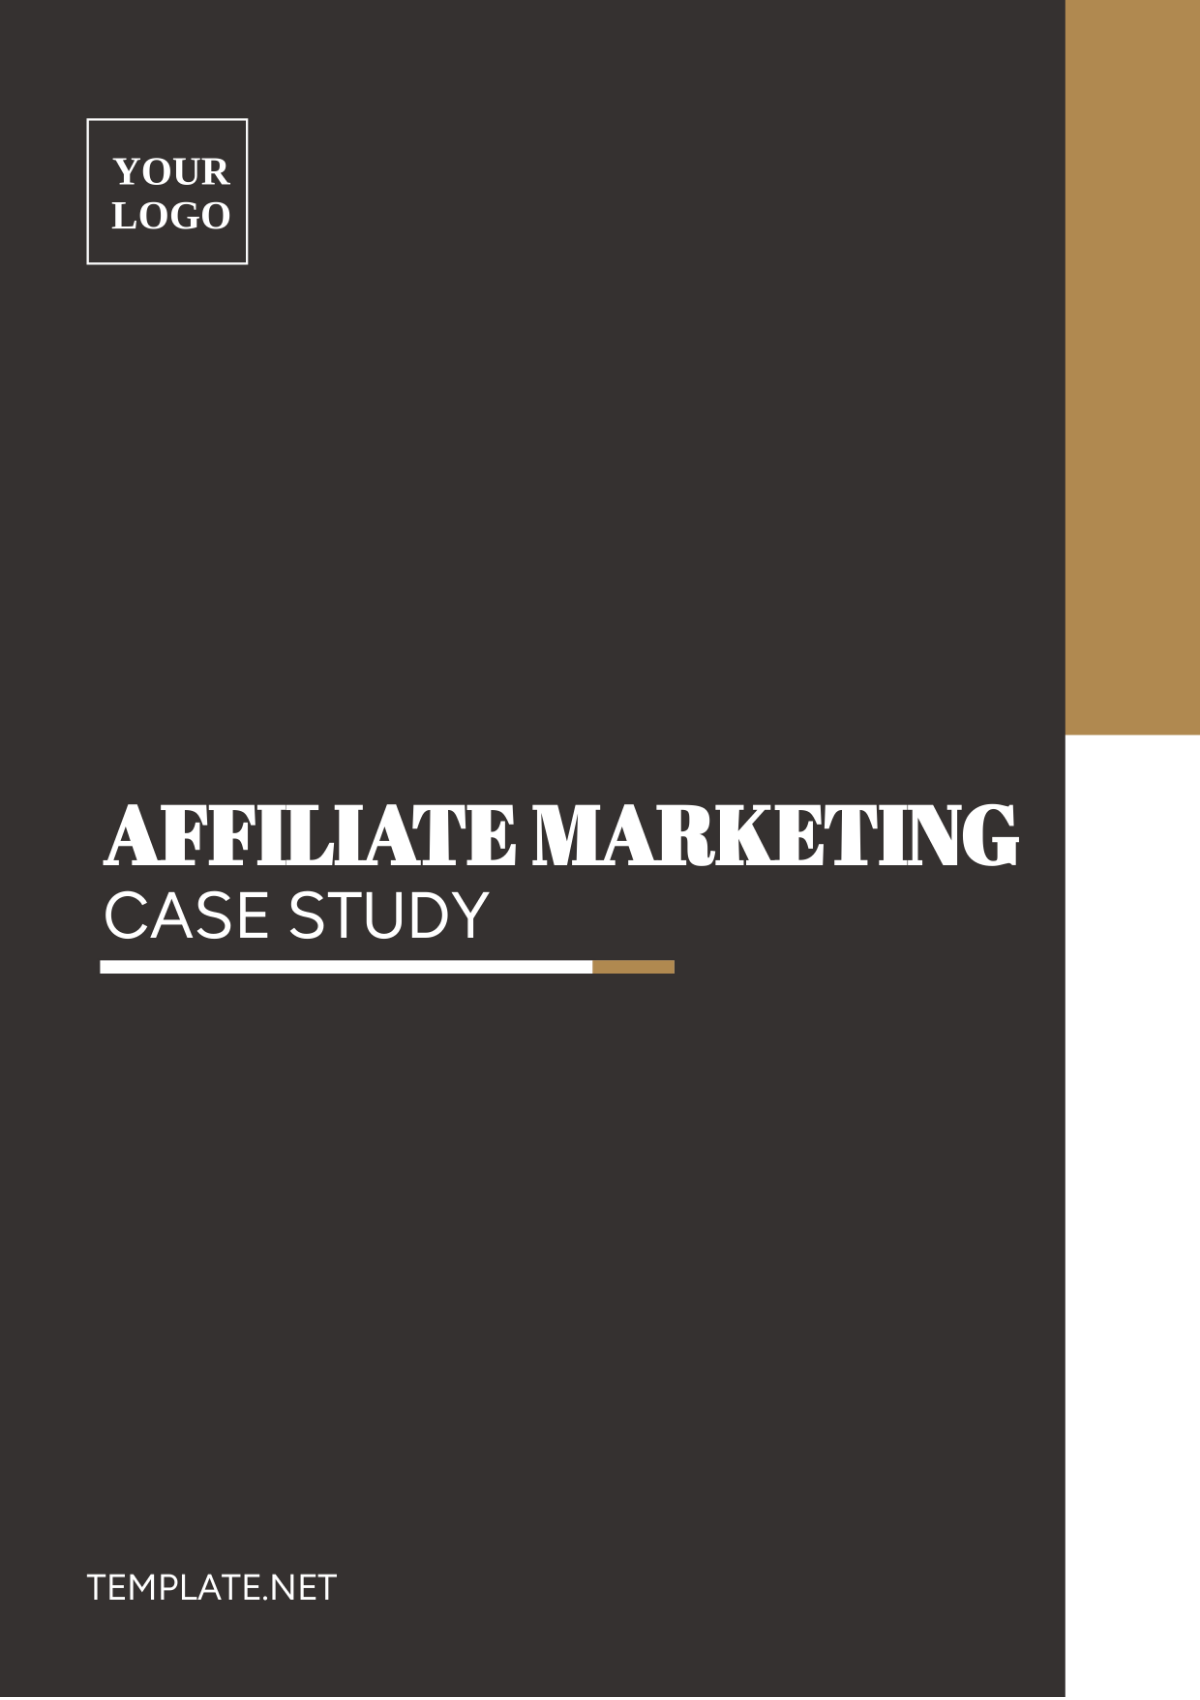 Free Affiliate Marketing Case Study Template